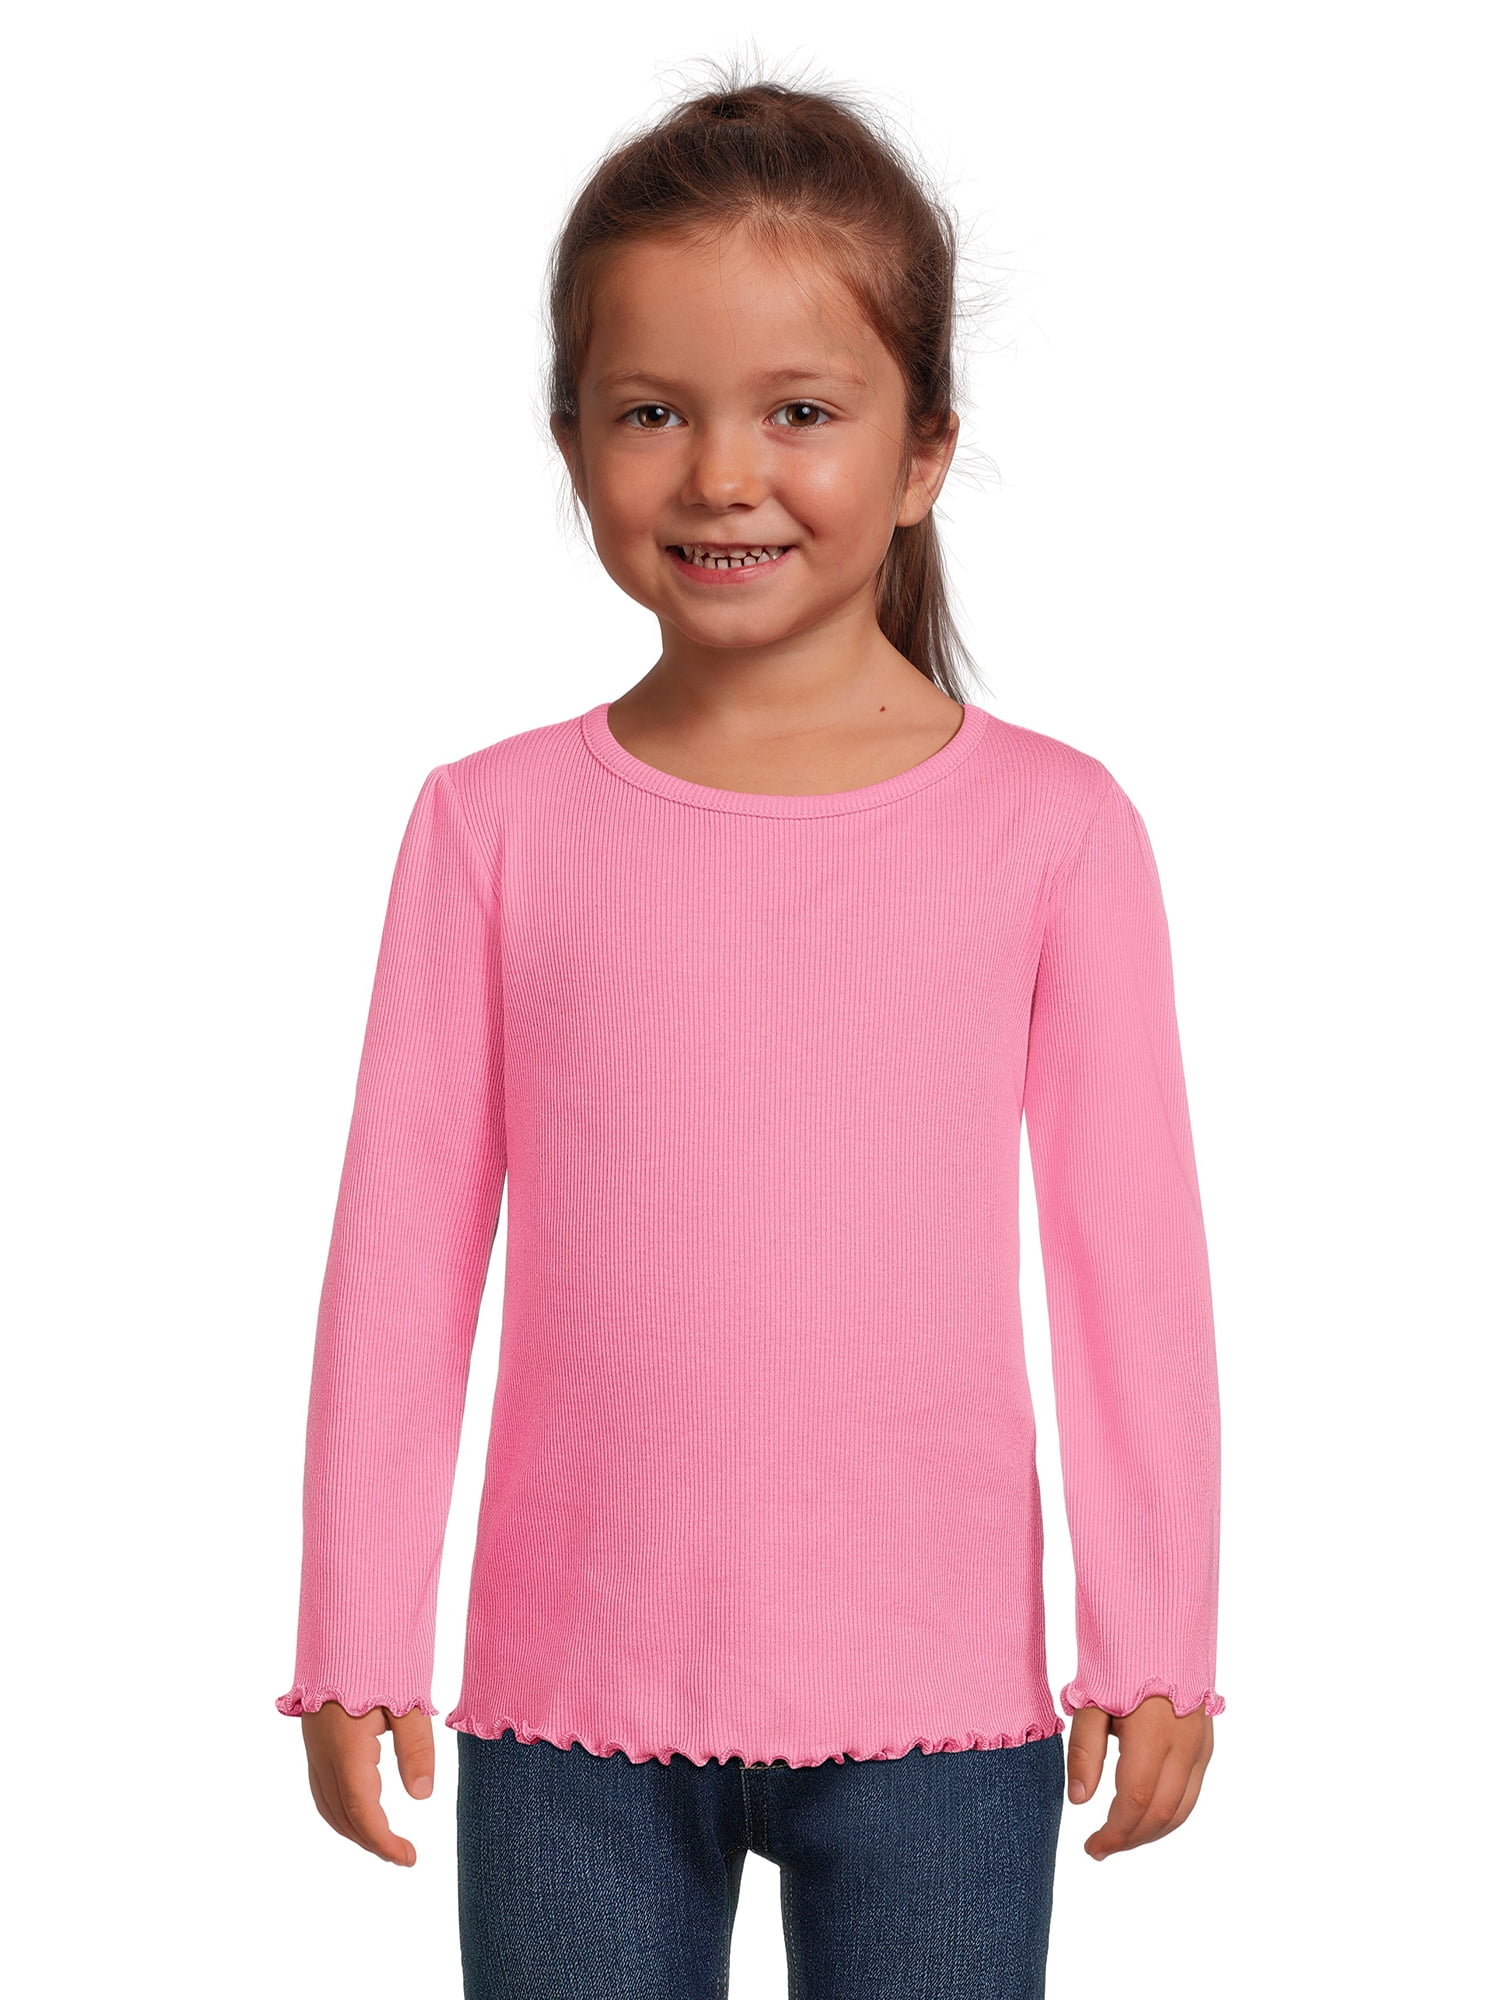 Garanimals Toddler Girl Ribbed Long Sleeve Top, Sizes 12M-5T | T-Shirts